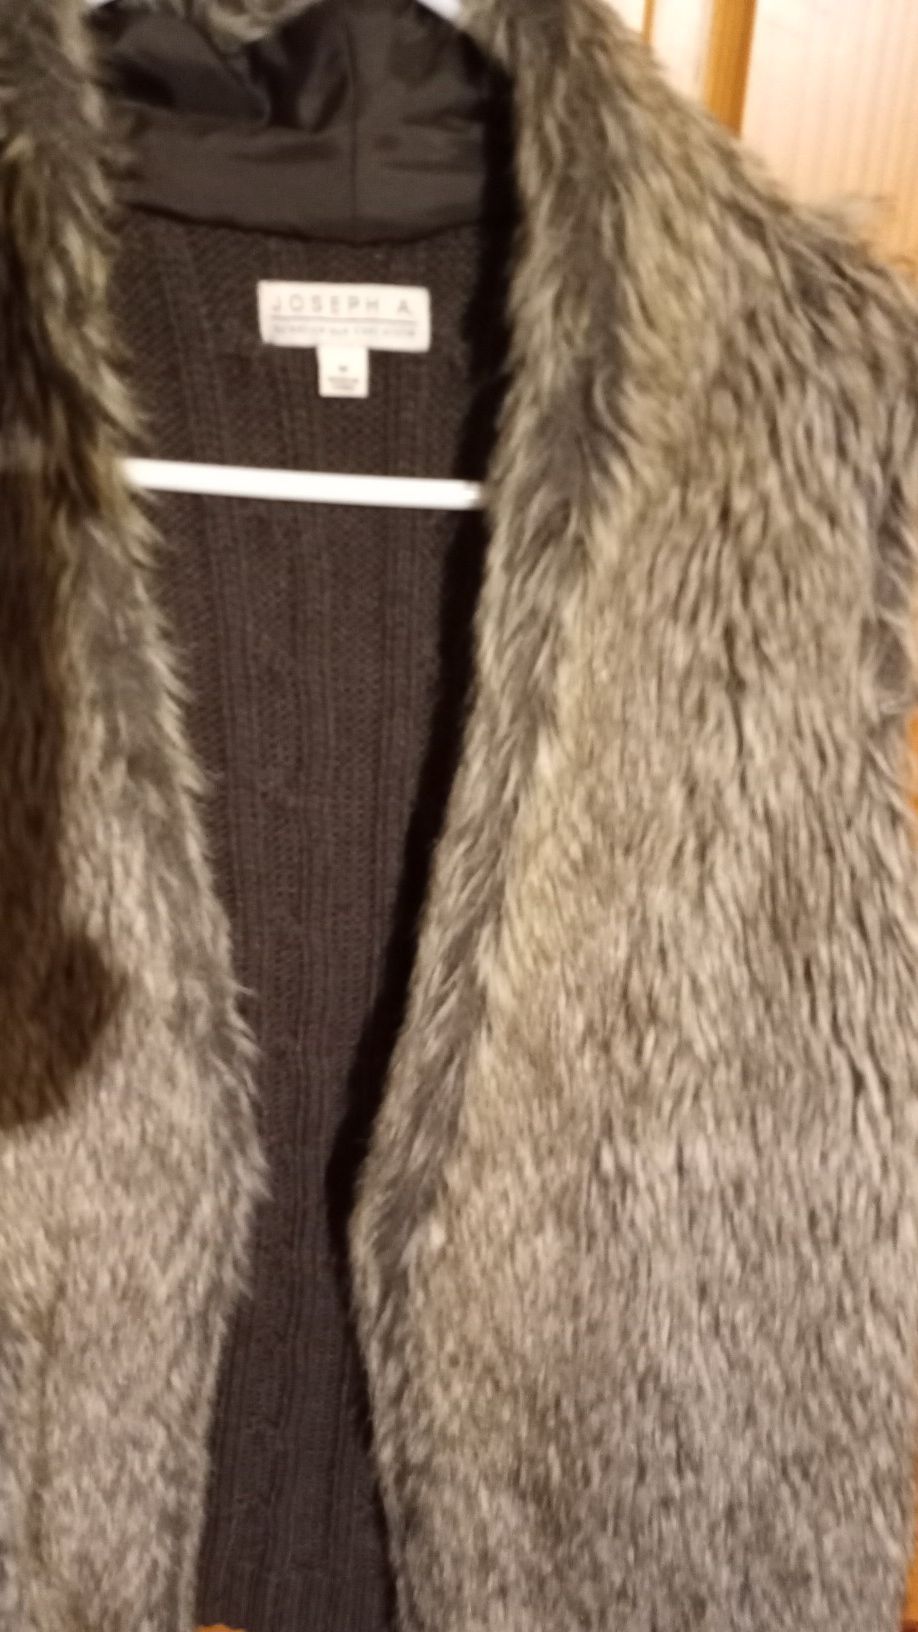 Size m faux fur and sweater vest by Joseph a